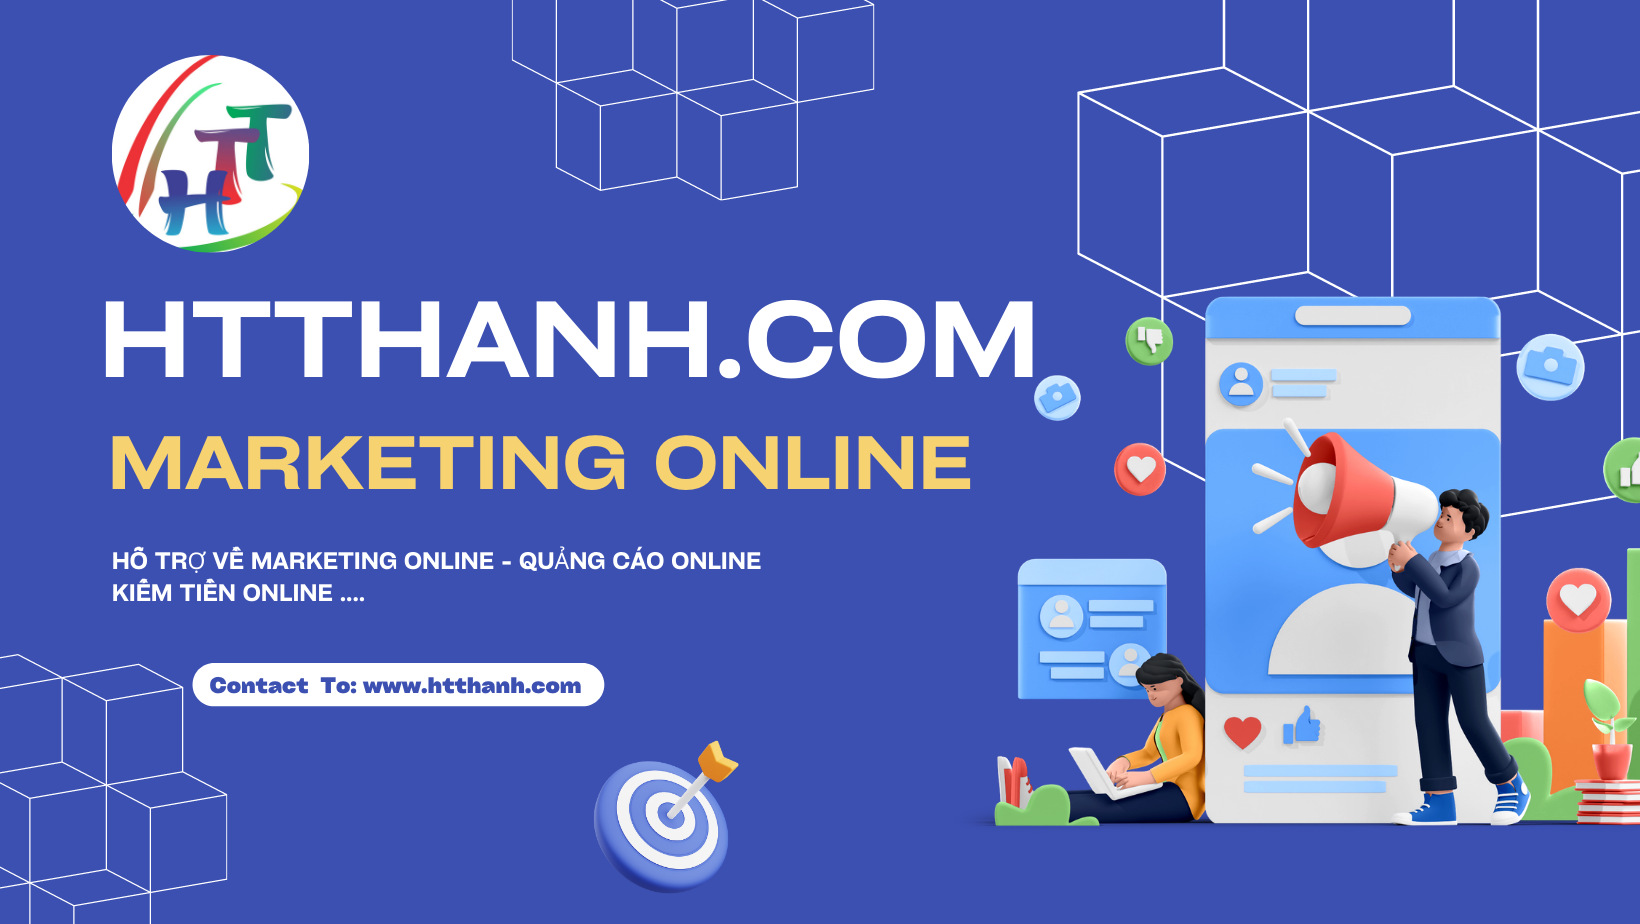 Marketing Online - HTTHANH.COM